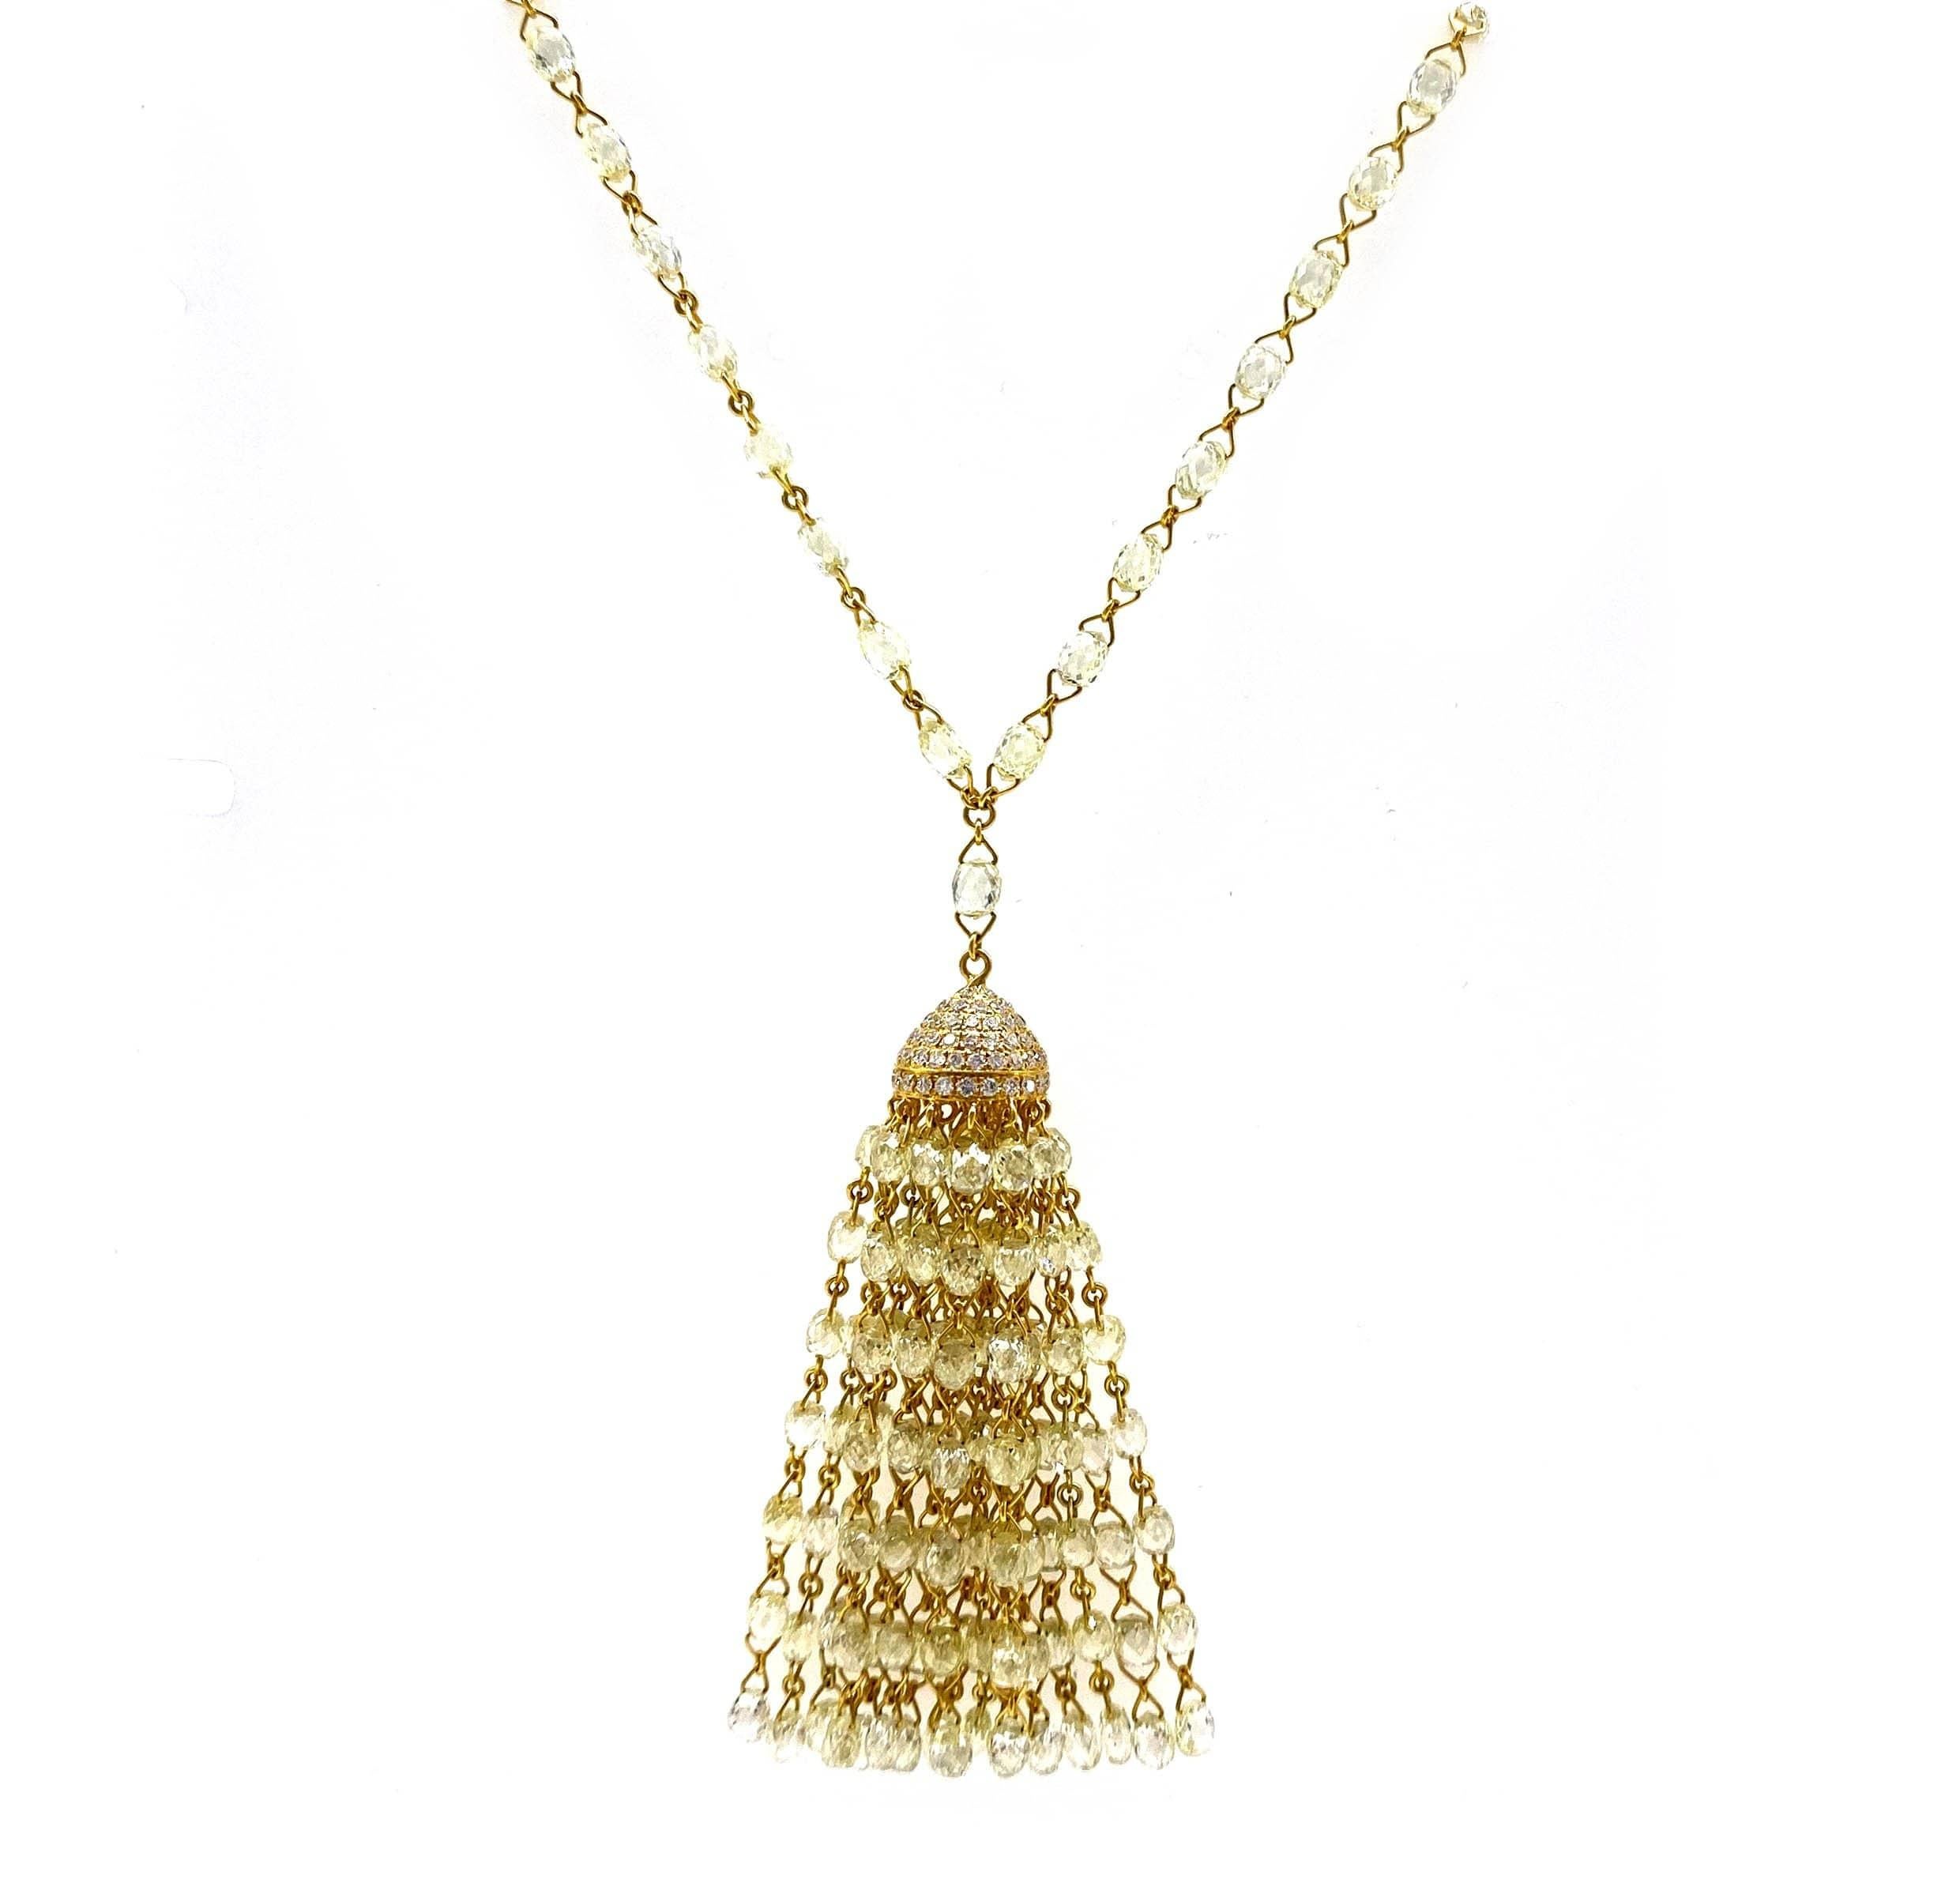 PANIM 36.46Ct Diamond Briolette & Beads Tassel Necklace in 18 Karat Yellow Gold For Sale 2